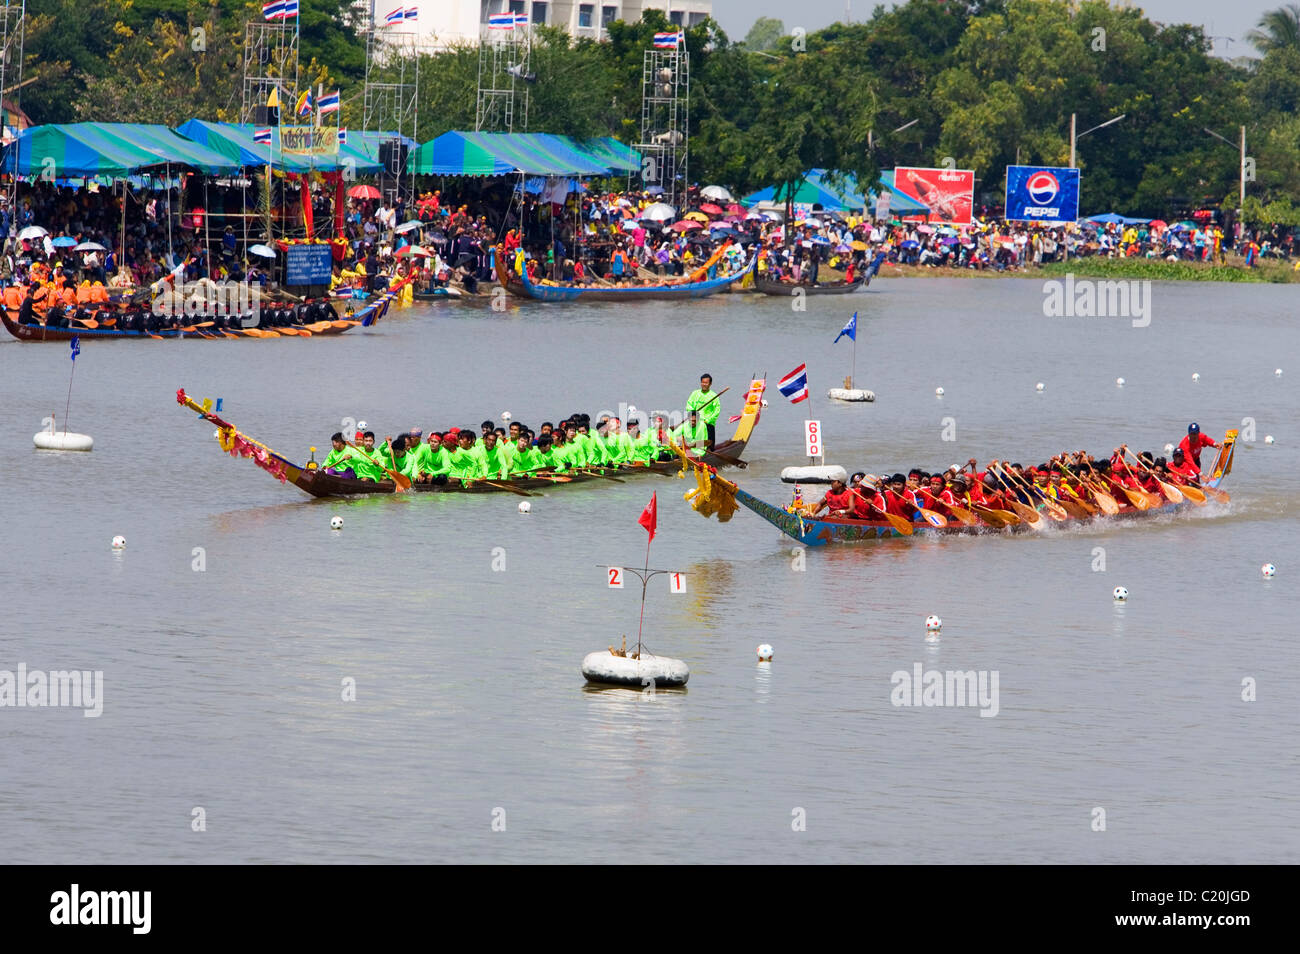 Larga regatas en el río Phimai Chakrai durante el Festival. Phimai, provincia de Nakhon Ratchasima, Tailandia Foto de stock